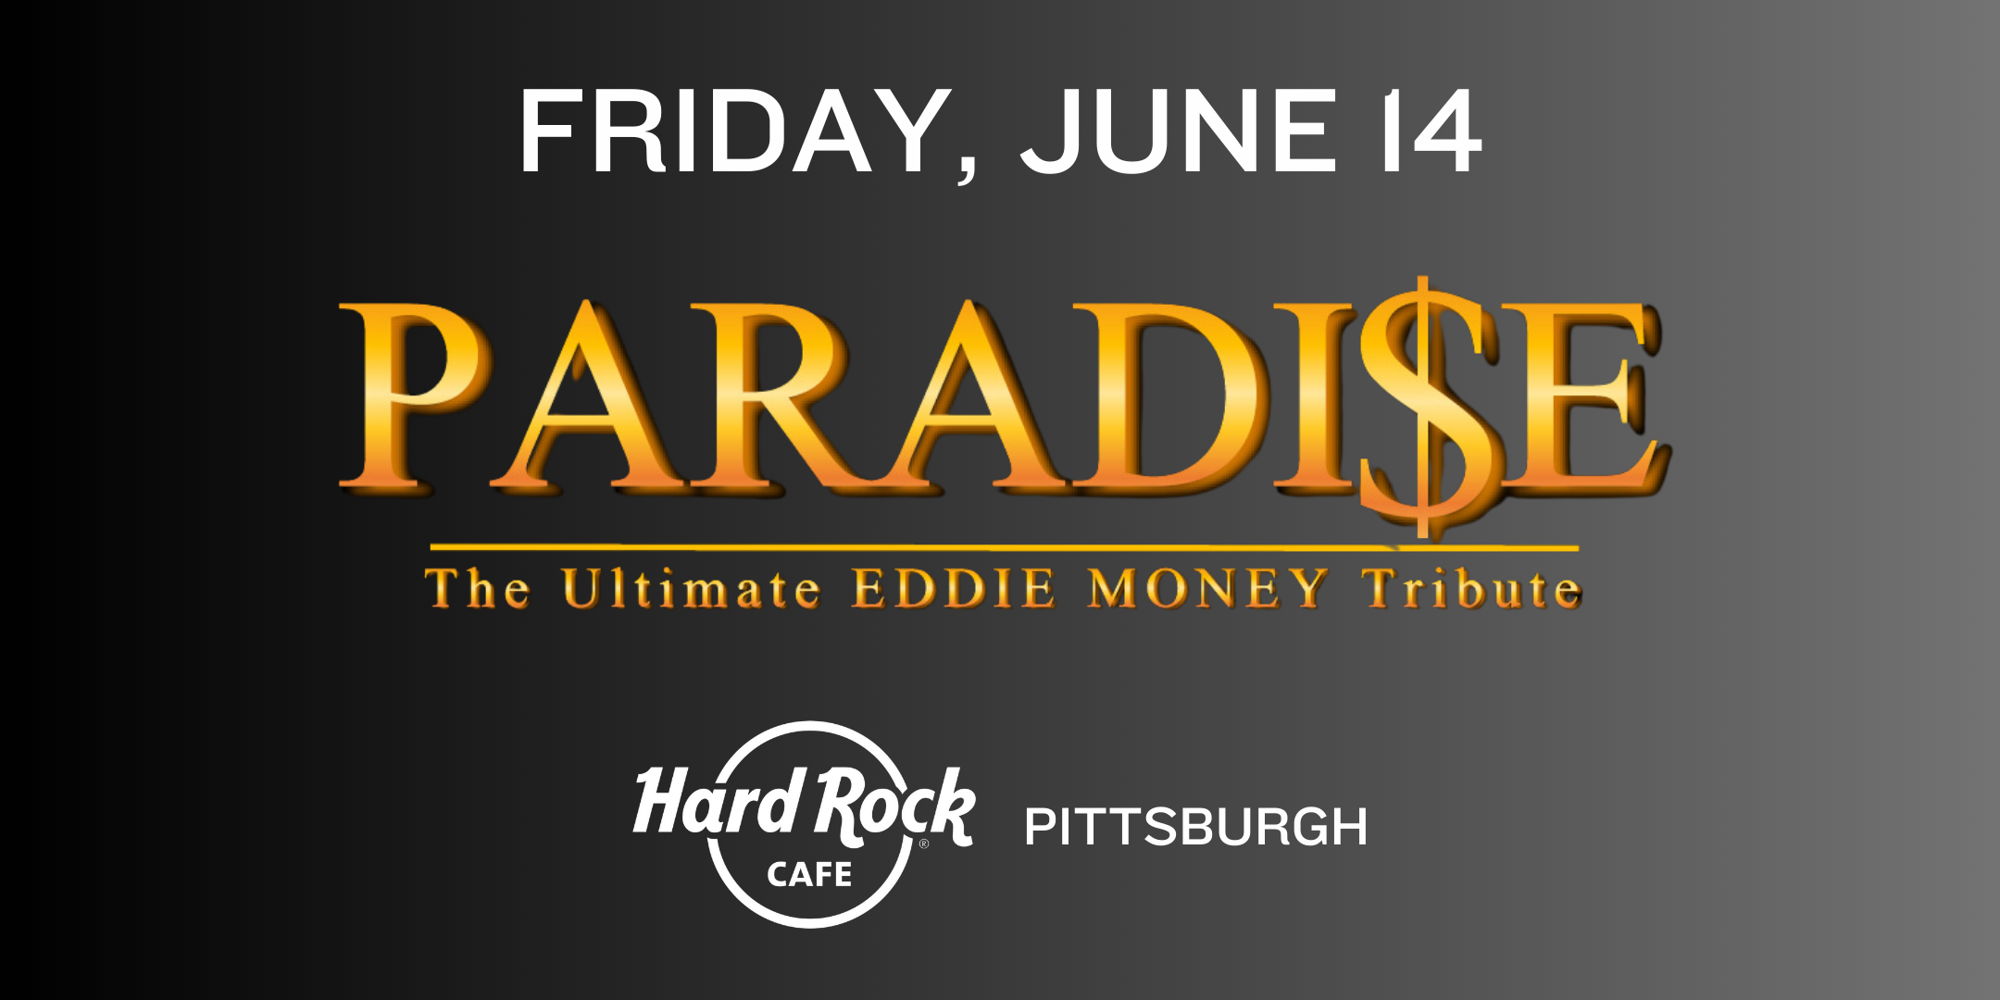 Paradi$e (The Ultimate Eddie Money Tribute) promotional image